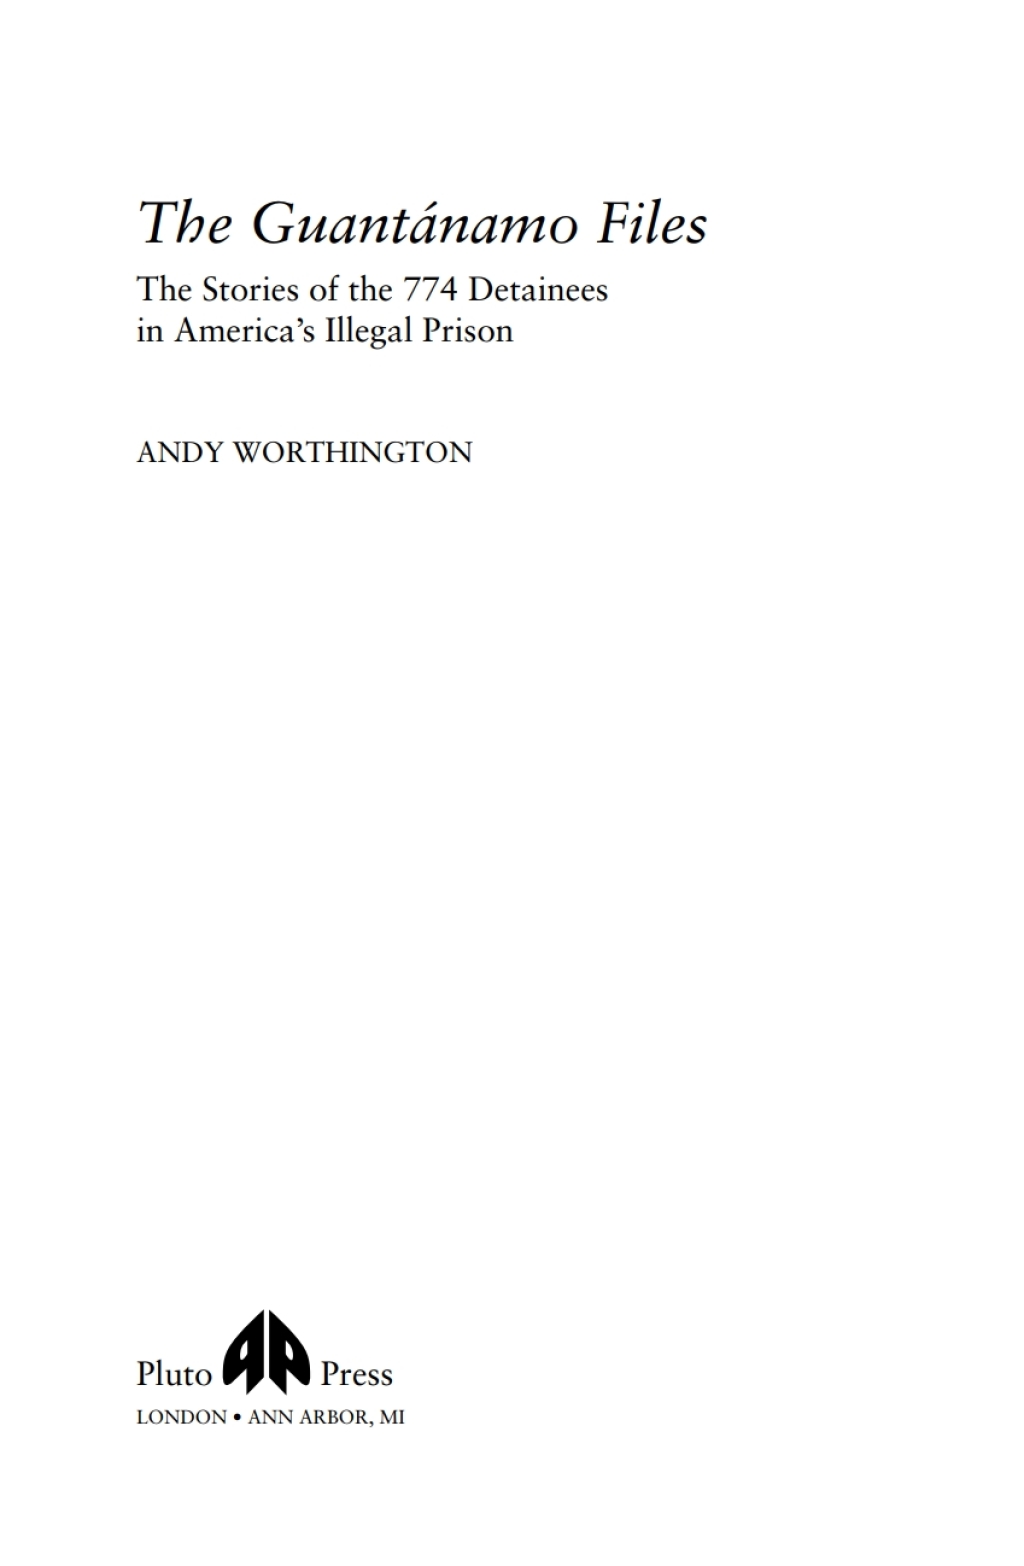 The Guantanamo Files (eBook) - Andy Worthington